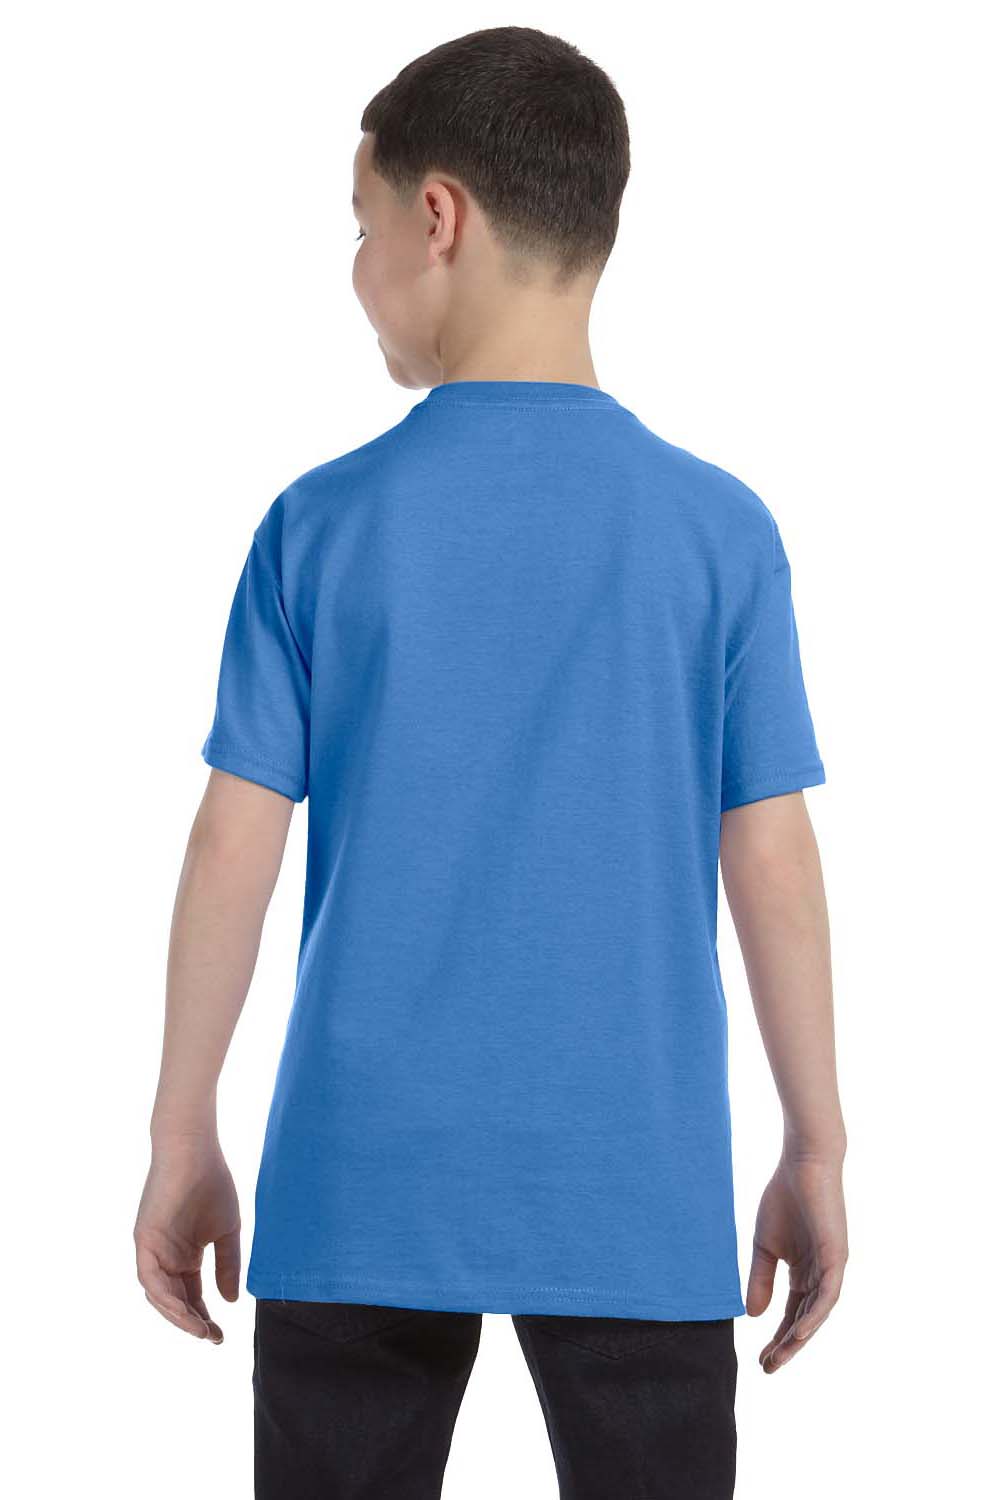 Jerzees 29B Youth Dri-Power Moisture Wicking Short Sleeve Crewneck T-Shirt Columbia Blue Back